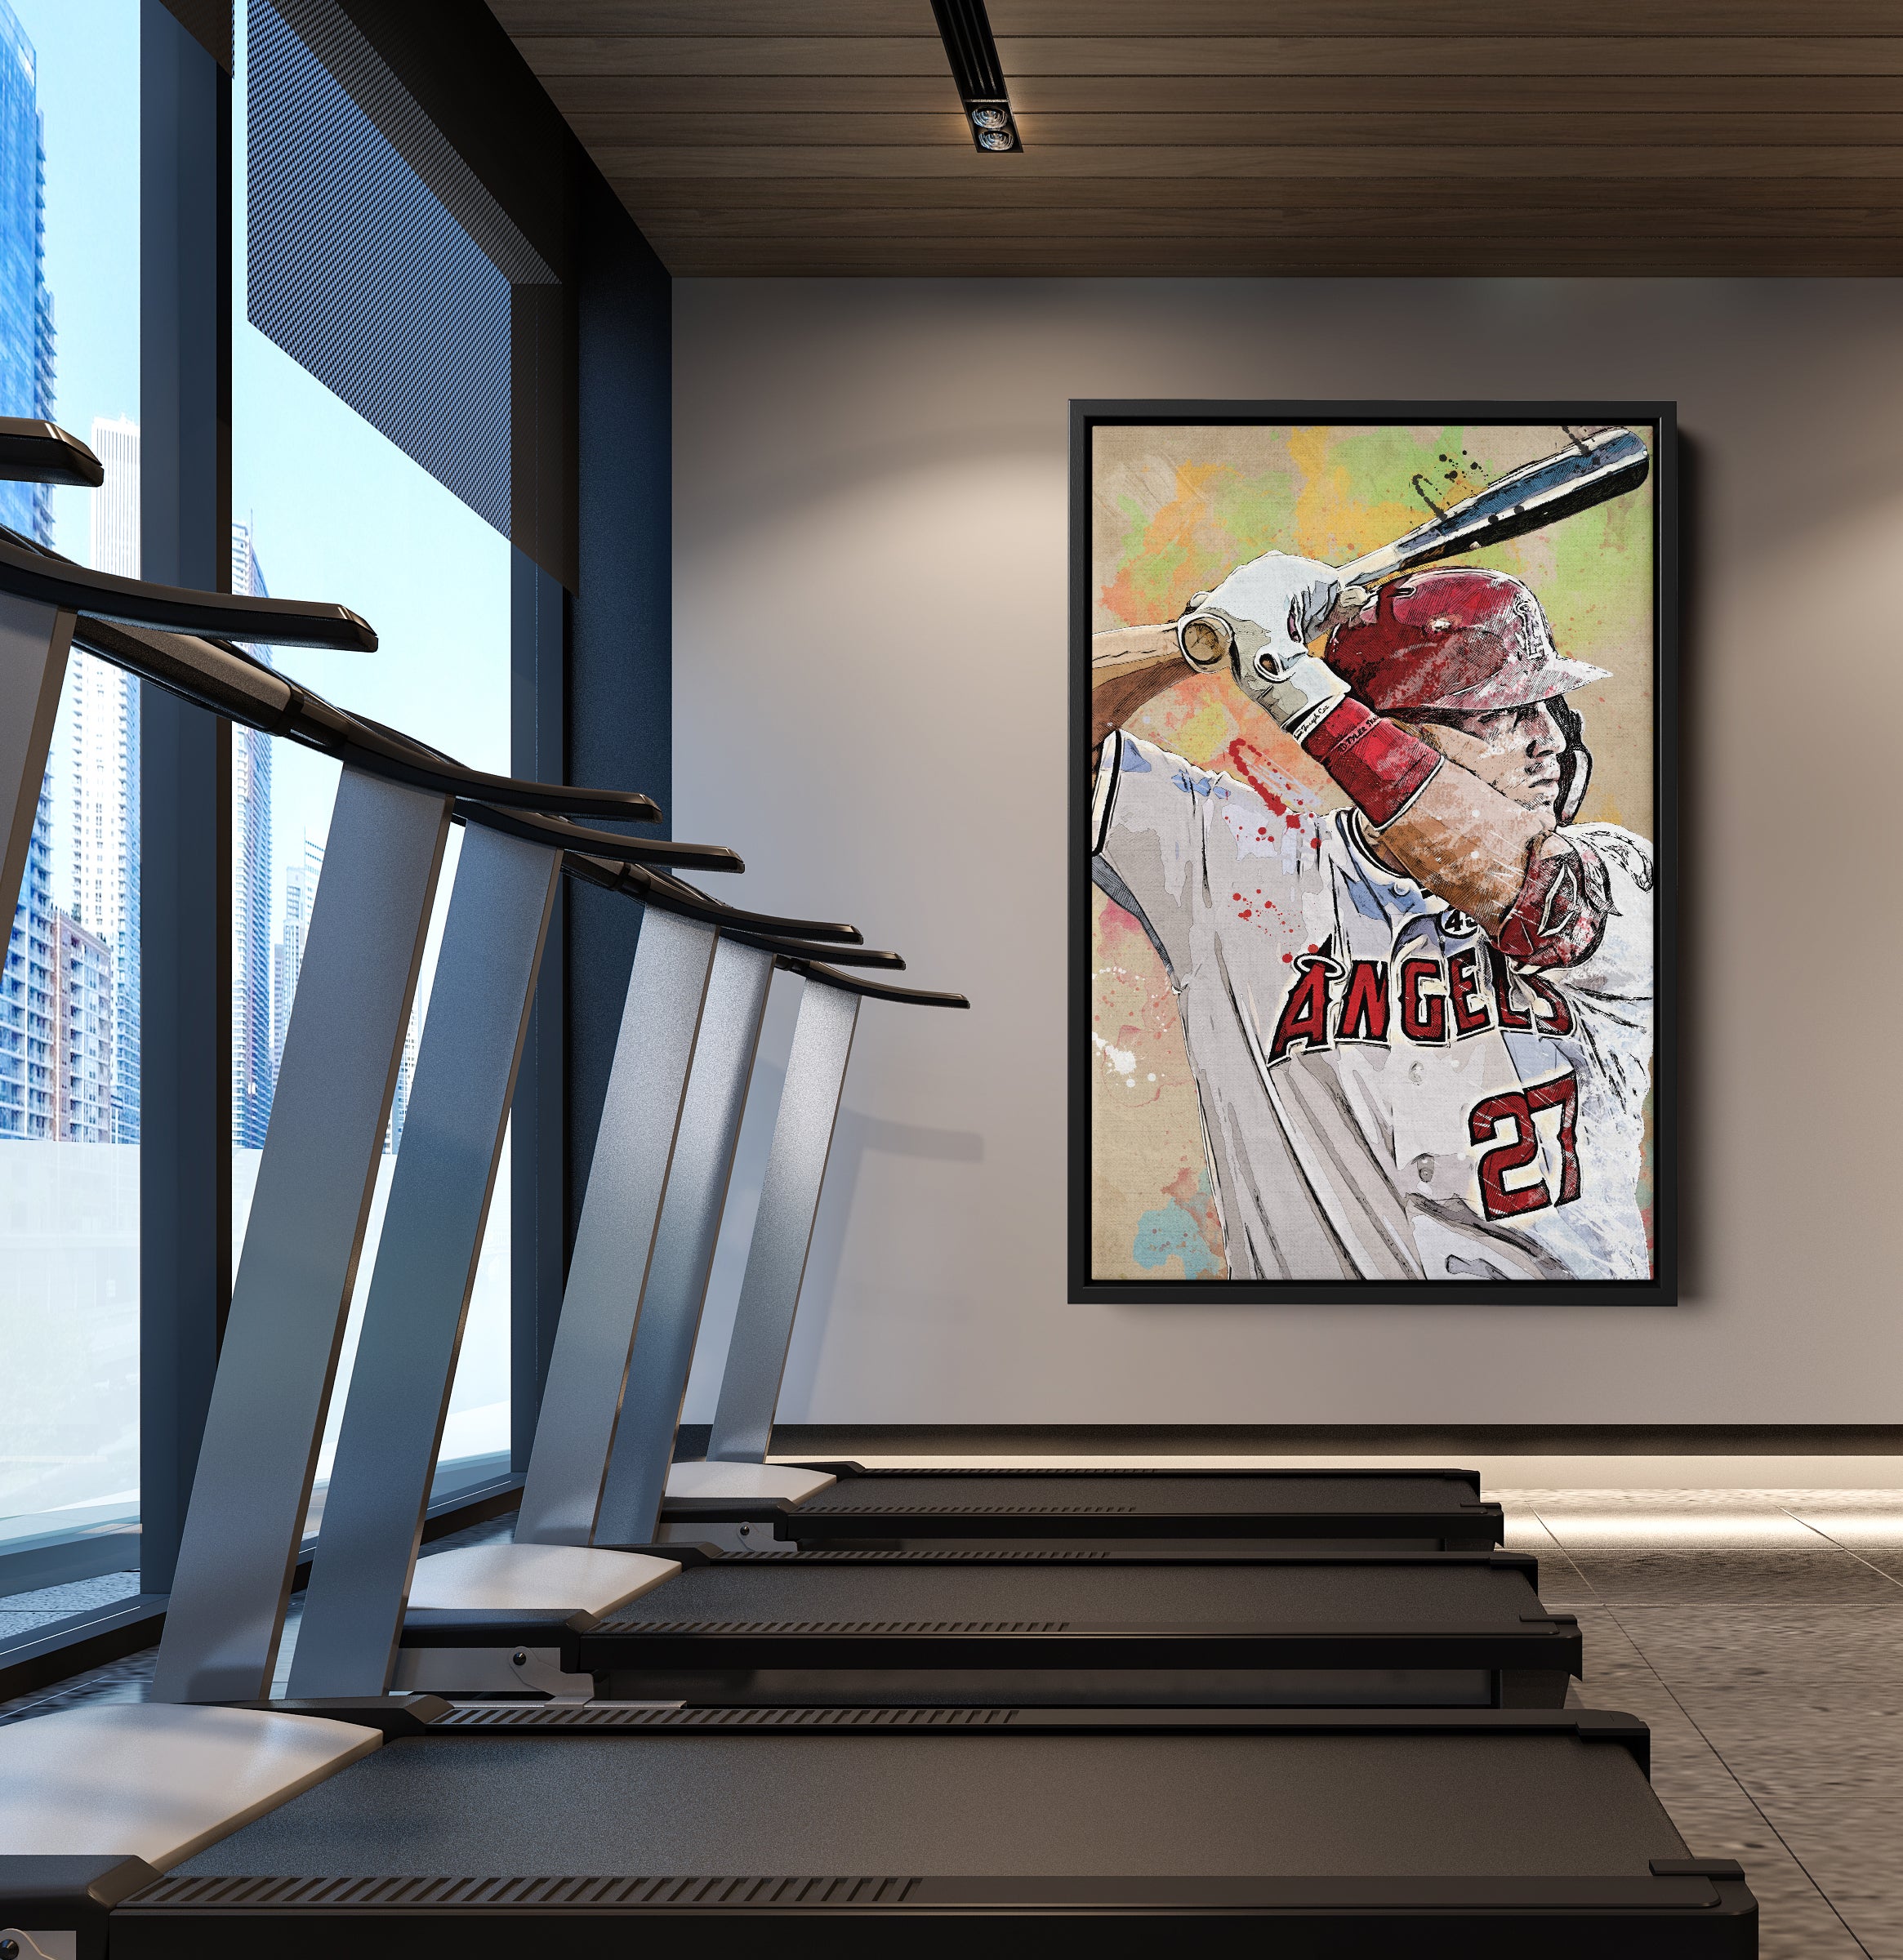 Mike Trout Printable Art Portrait Angel's Baseball 27 